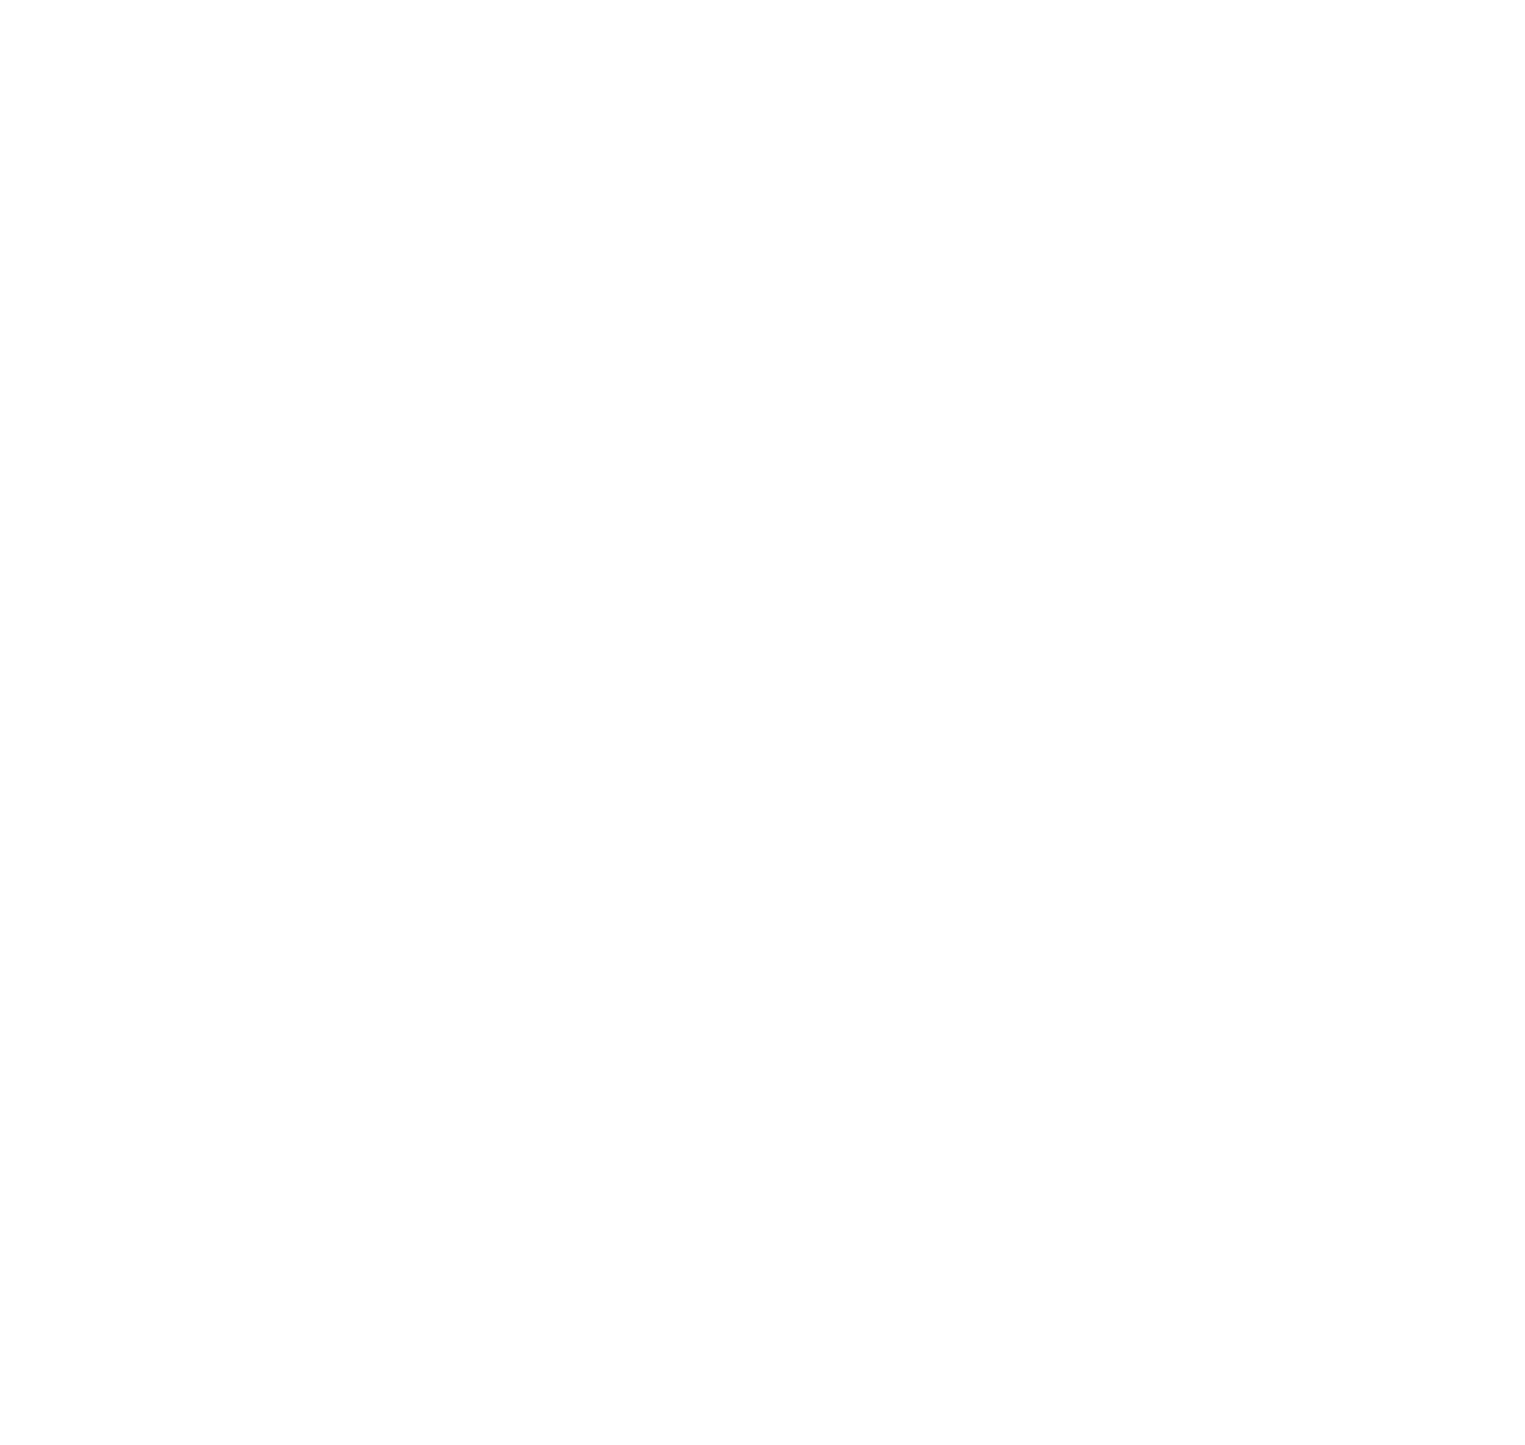 GEE Group logo for dark backgrounds (transparent PNG)